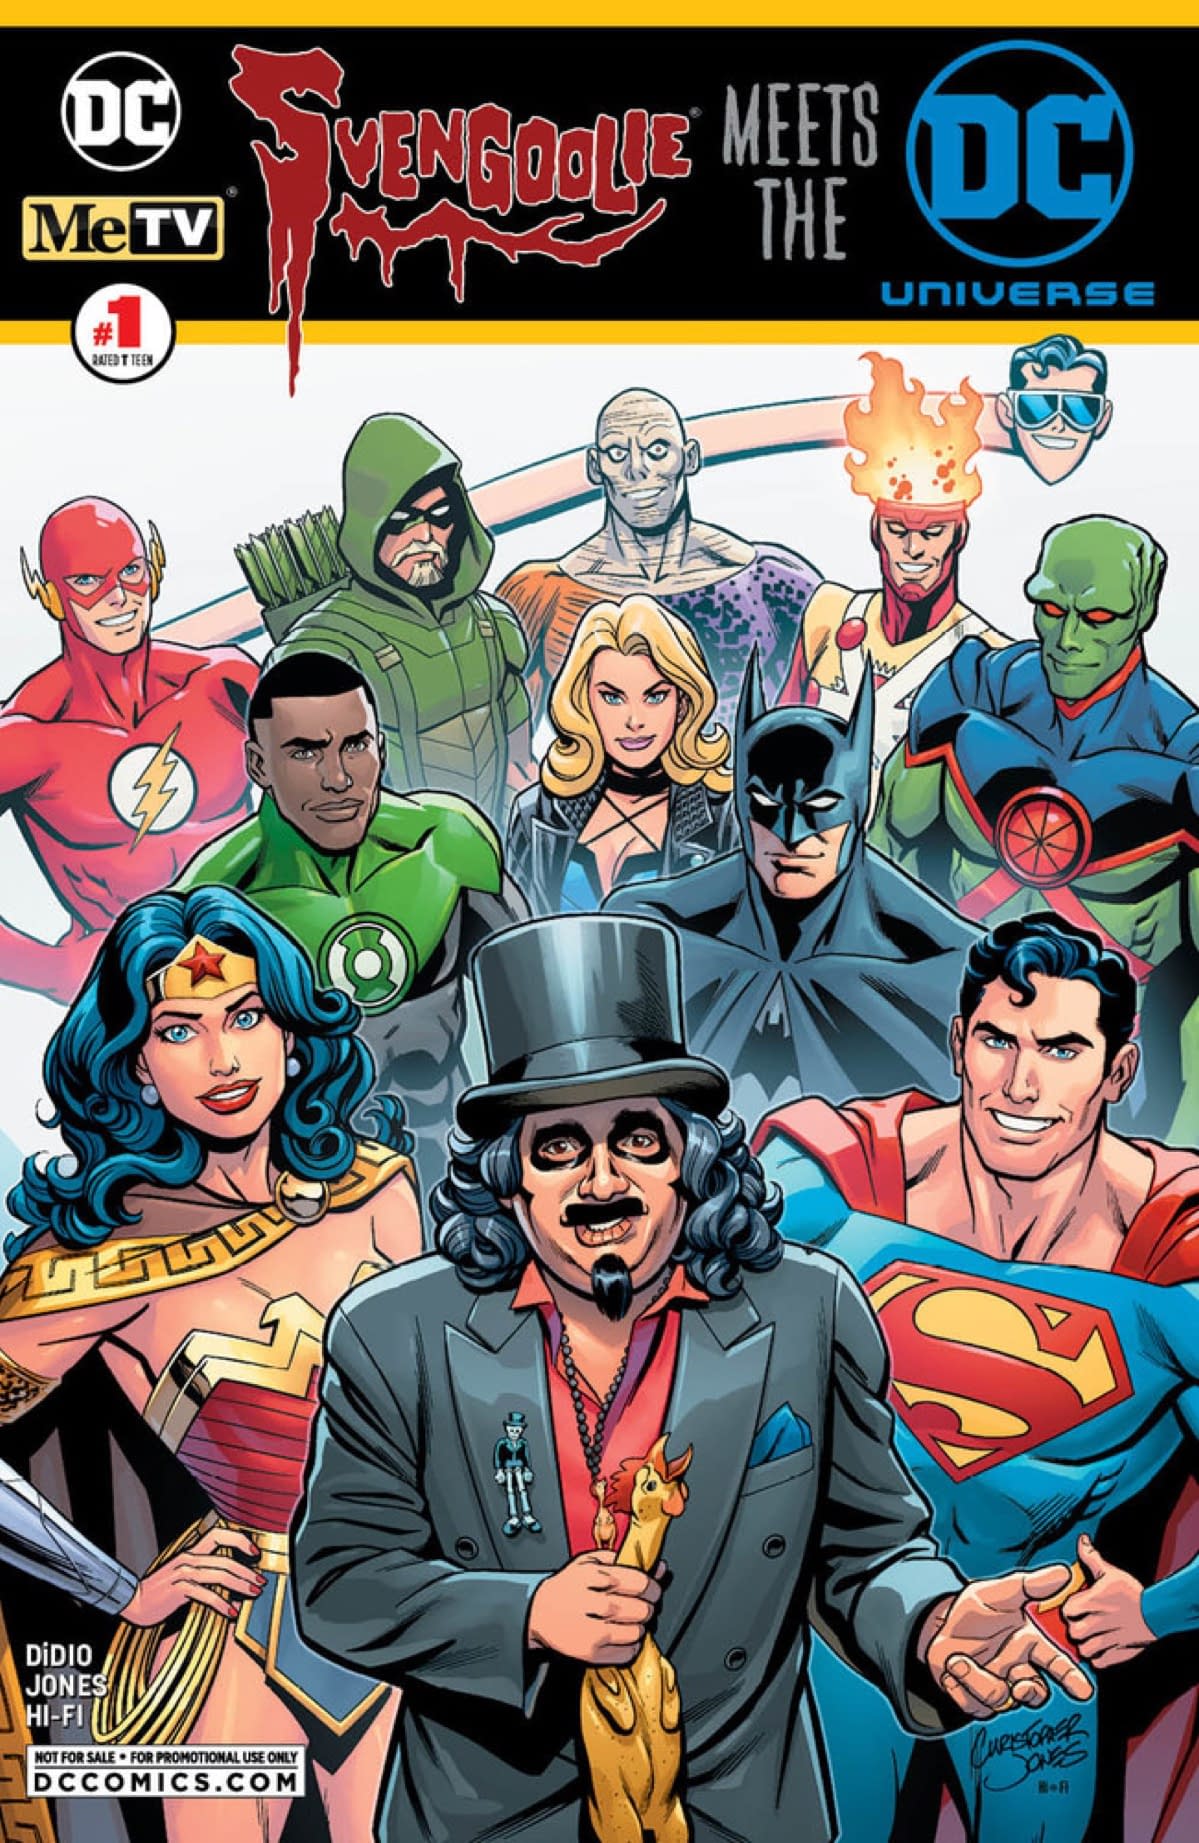 Dan Didio to Write Svengoolie Crossover for DC's October Comics